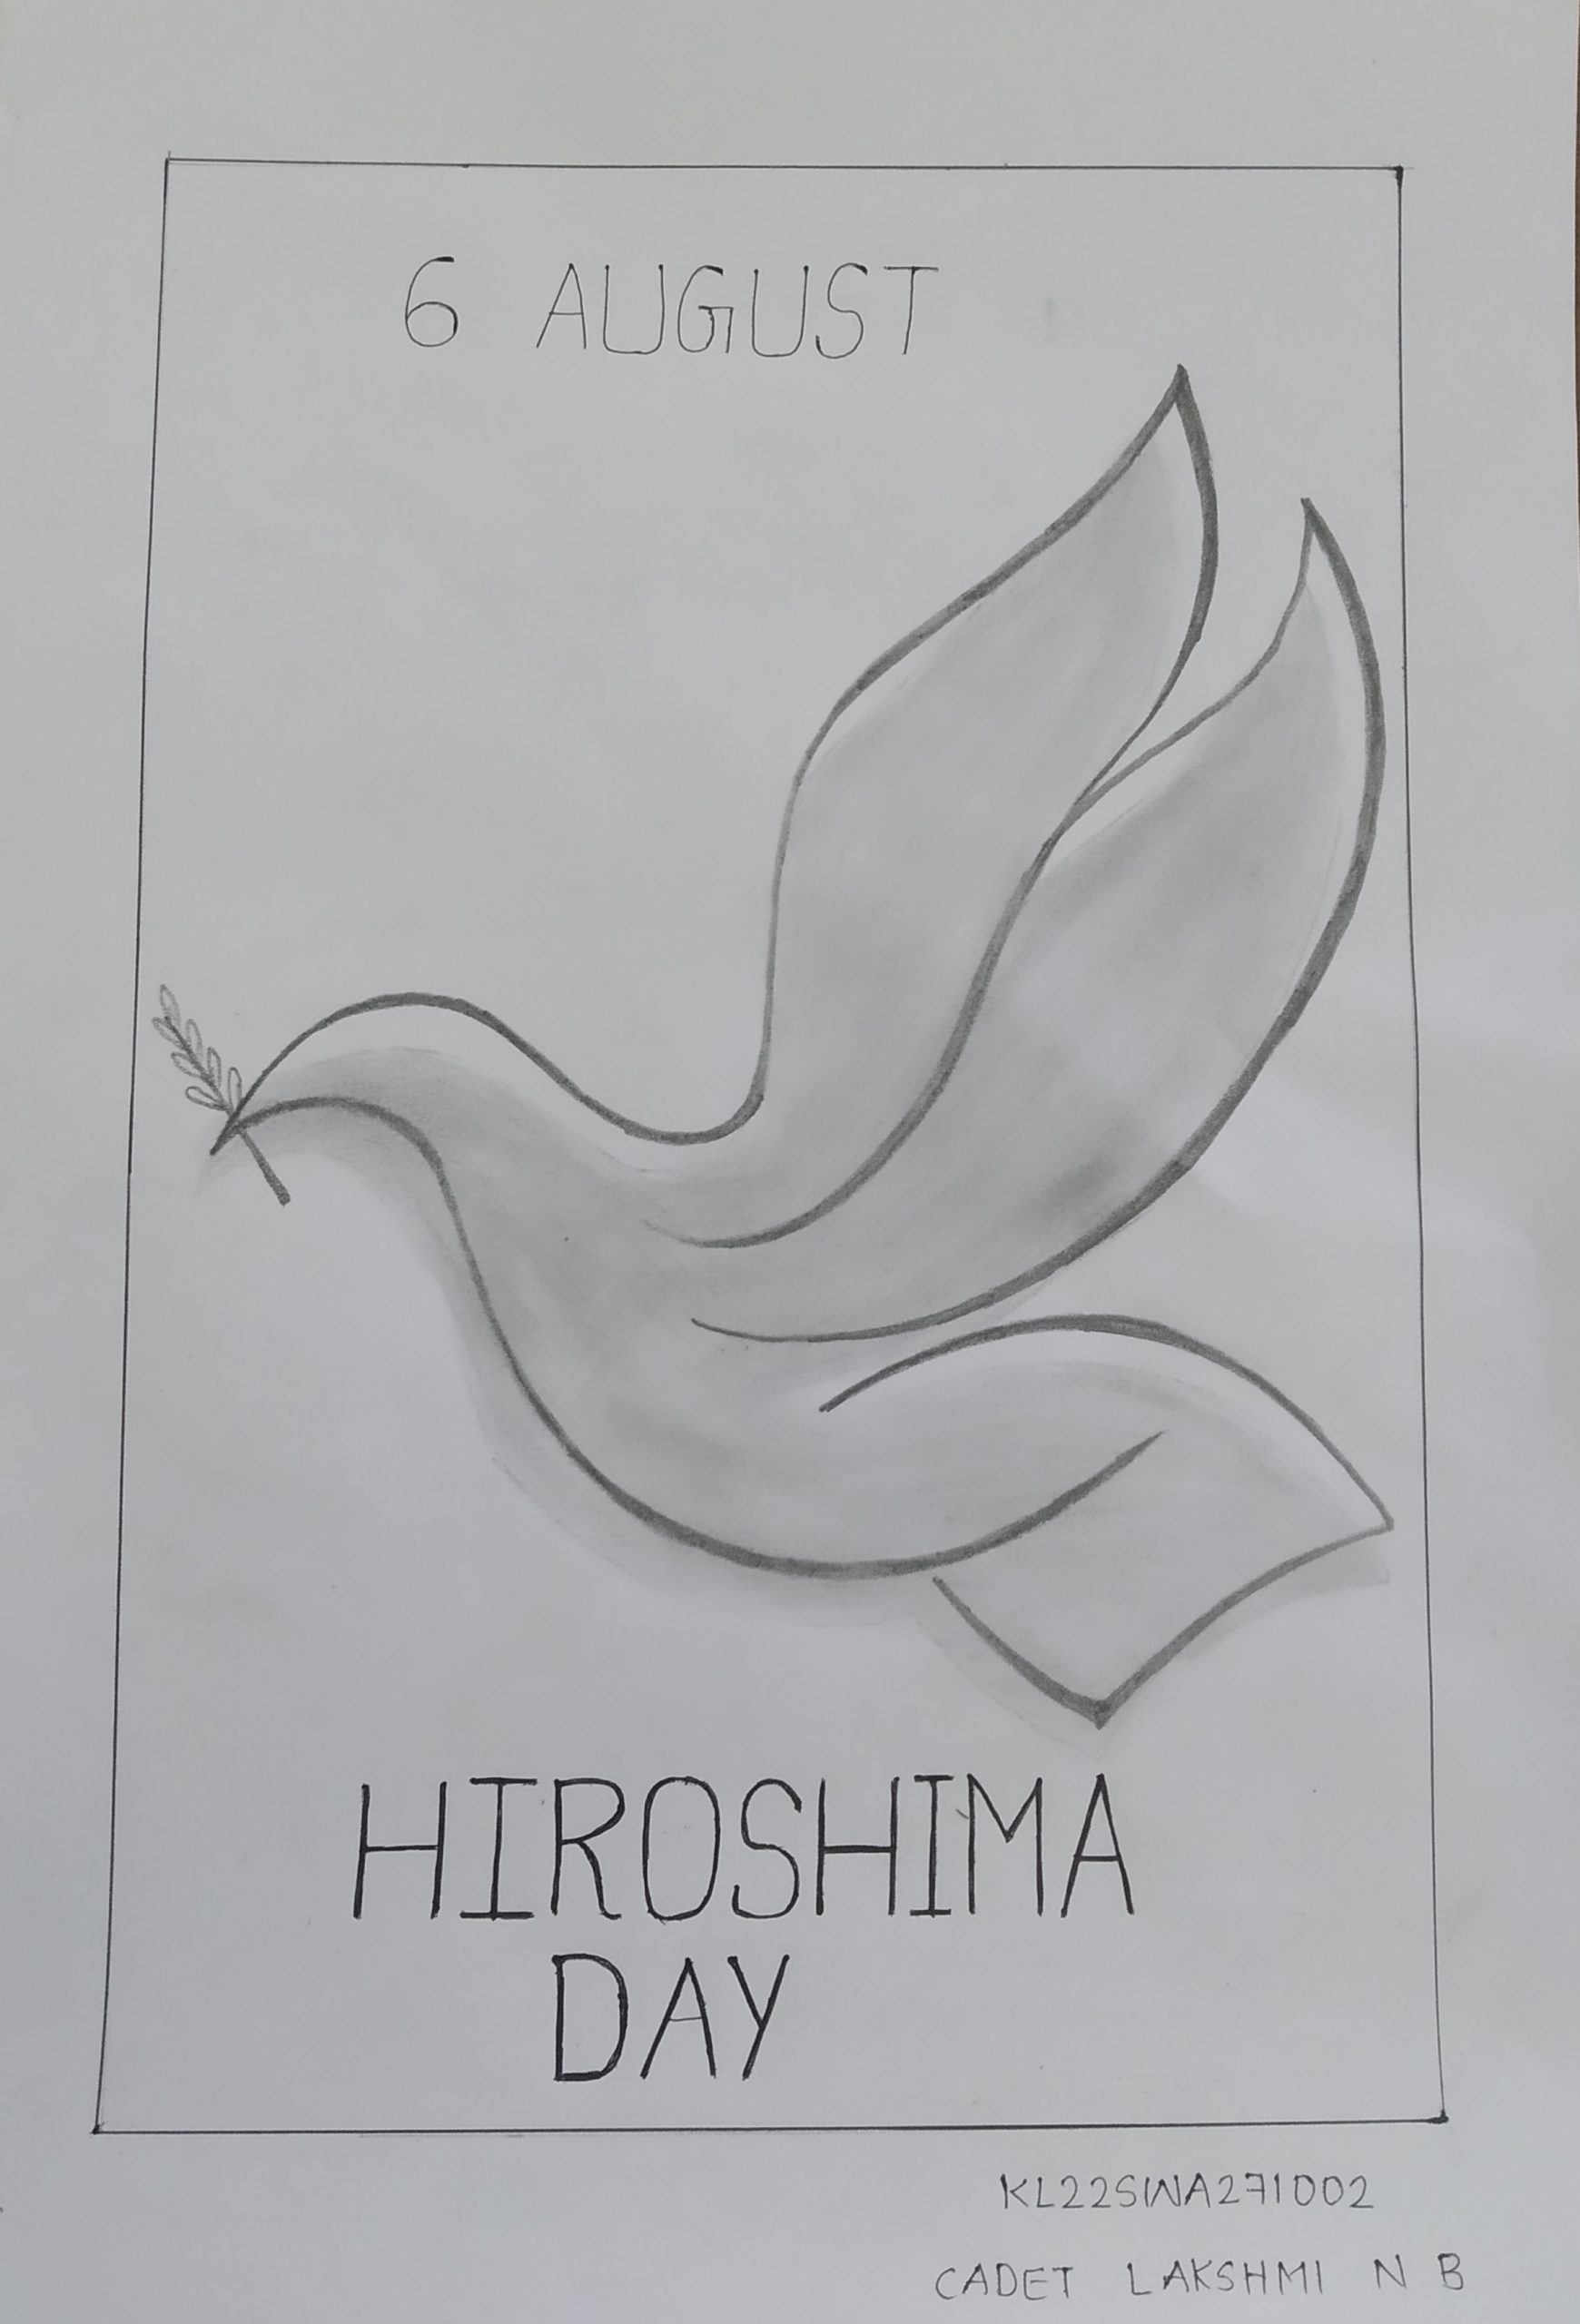 Hiroshima Nagasaki Day Drawing || How to Draw Hiroshima Nagasaki Day Poster  Easy step by step - YouTube